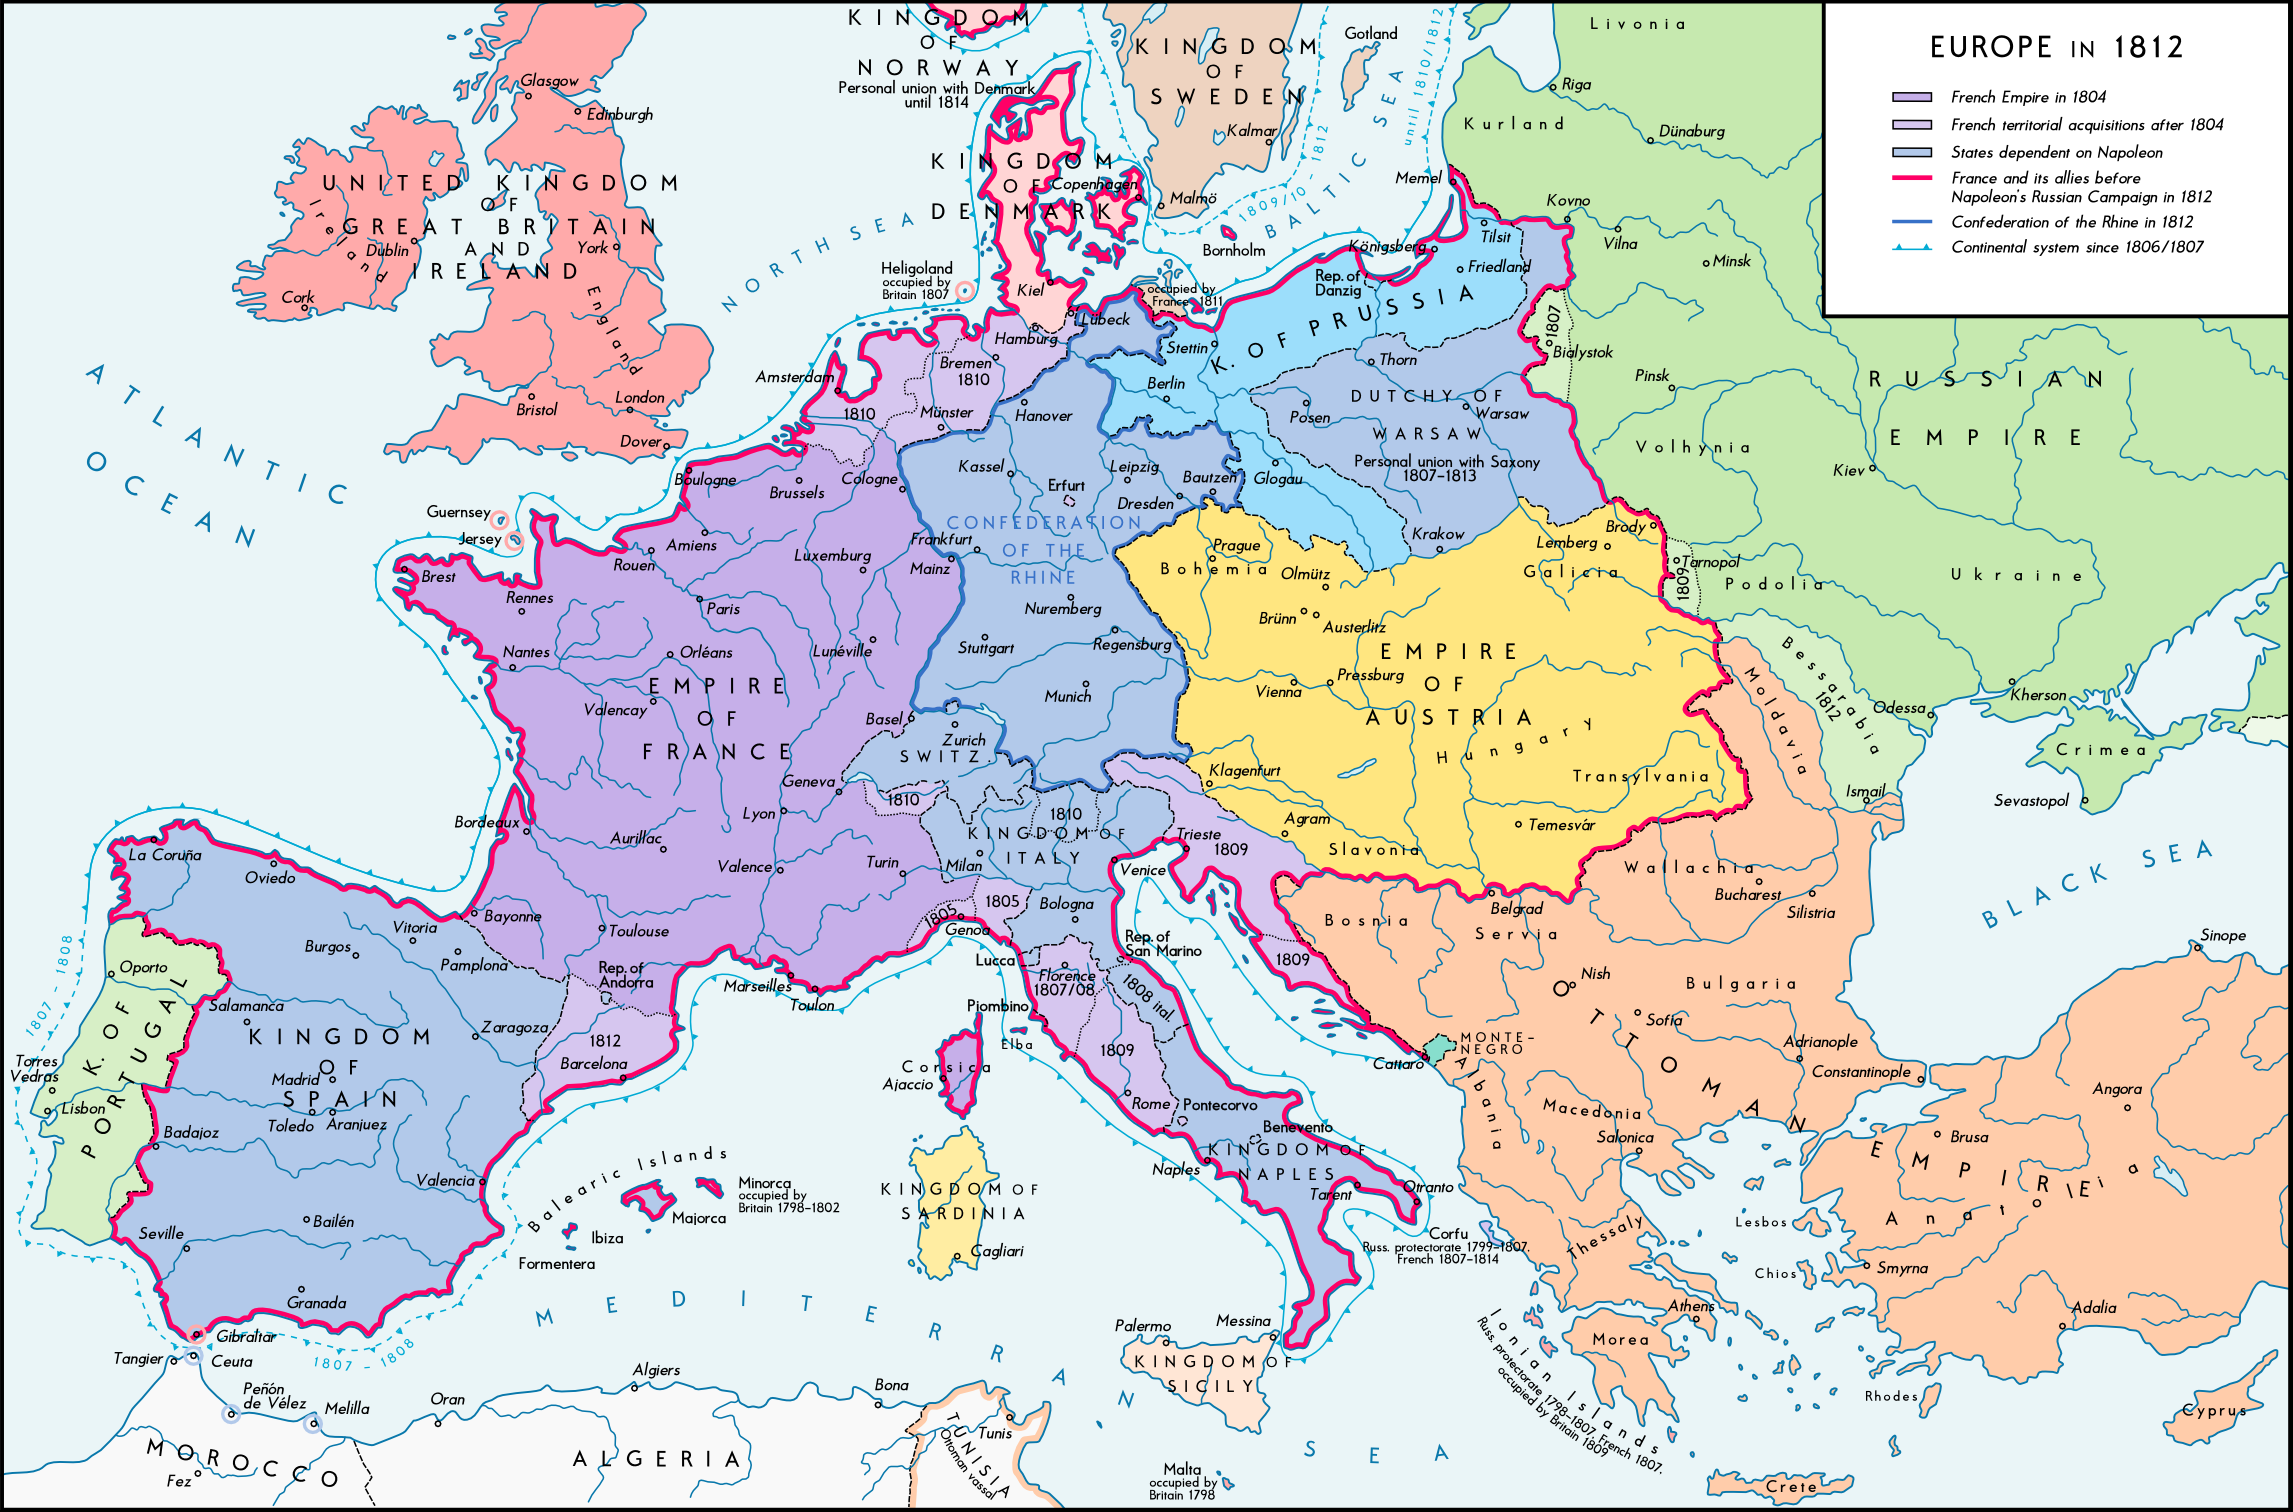 Napoleonic Wars: Europe in 1812.